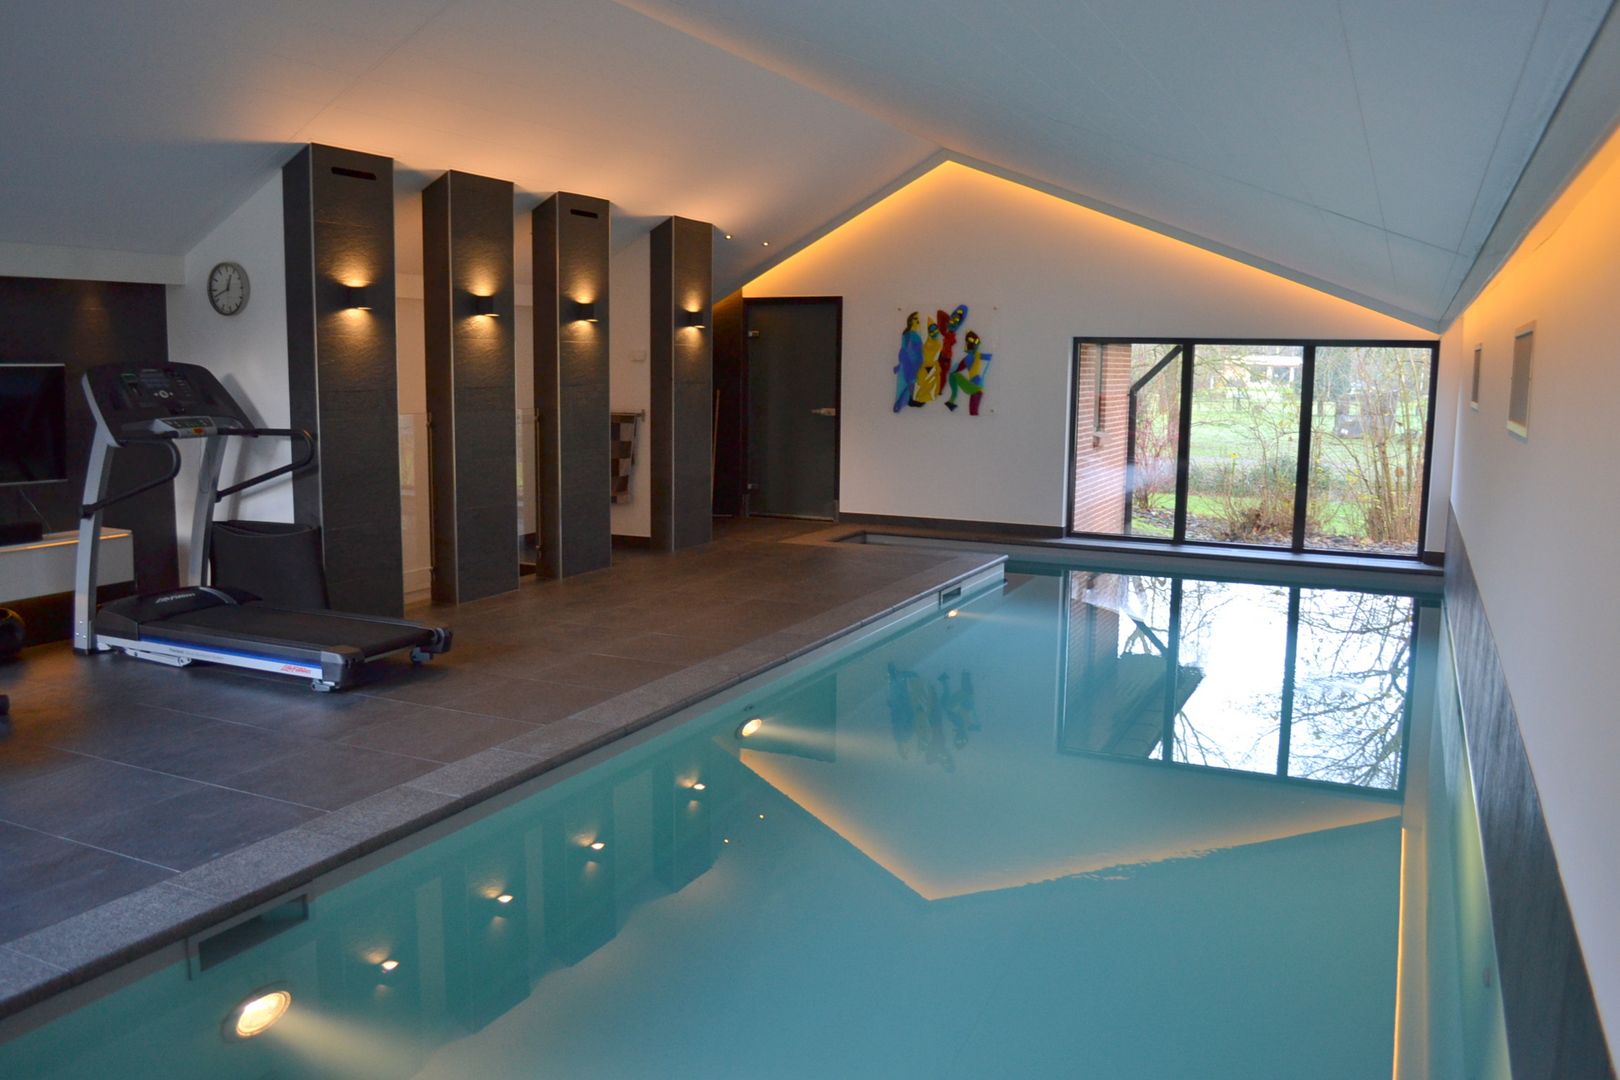 Pool, RON Stappenbelt, Interiordesign RON Stappenbelt, Interiordesign Modern pool